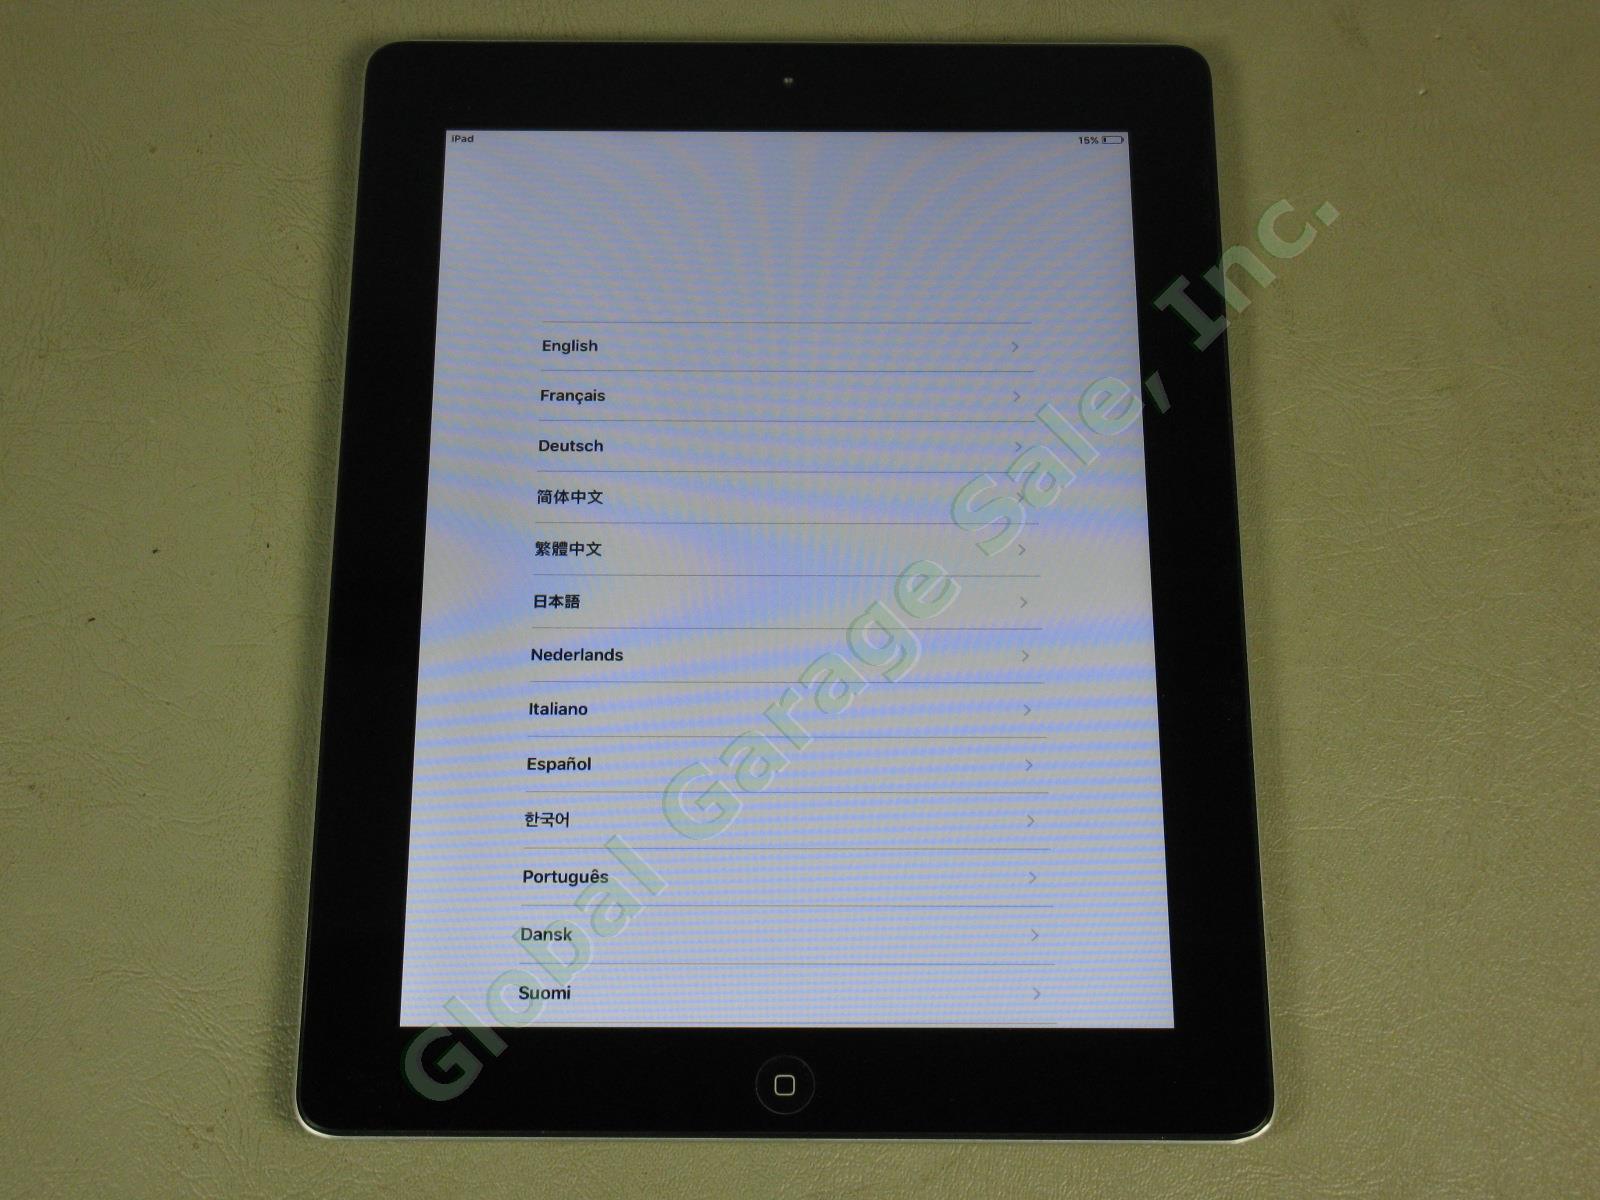 Apple iPad 2 Black Tablet 16GB Wifi Works Great Clean Screen MC770LL/A A1395 NR! 1